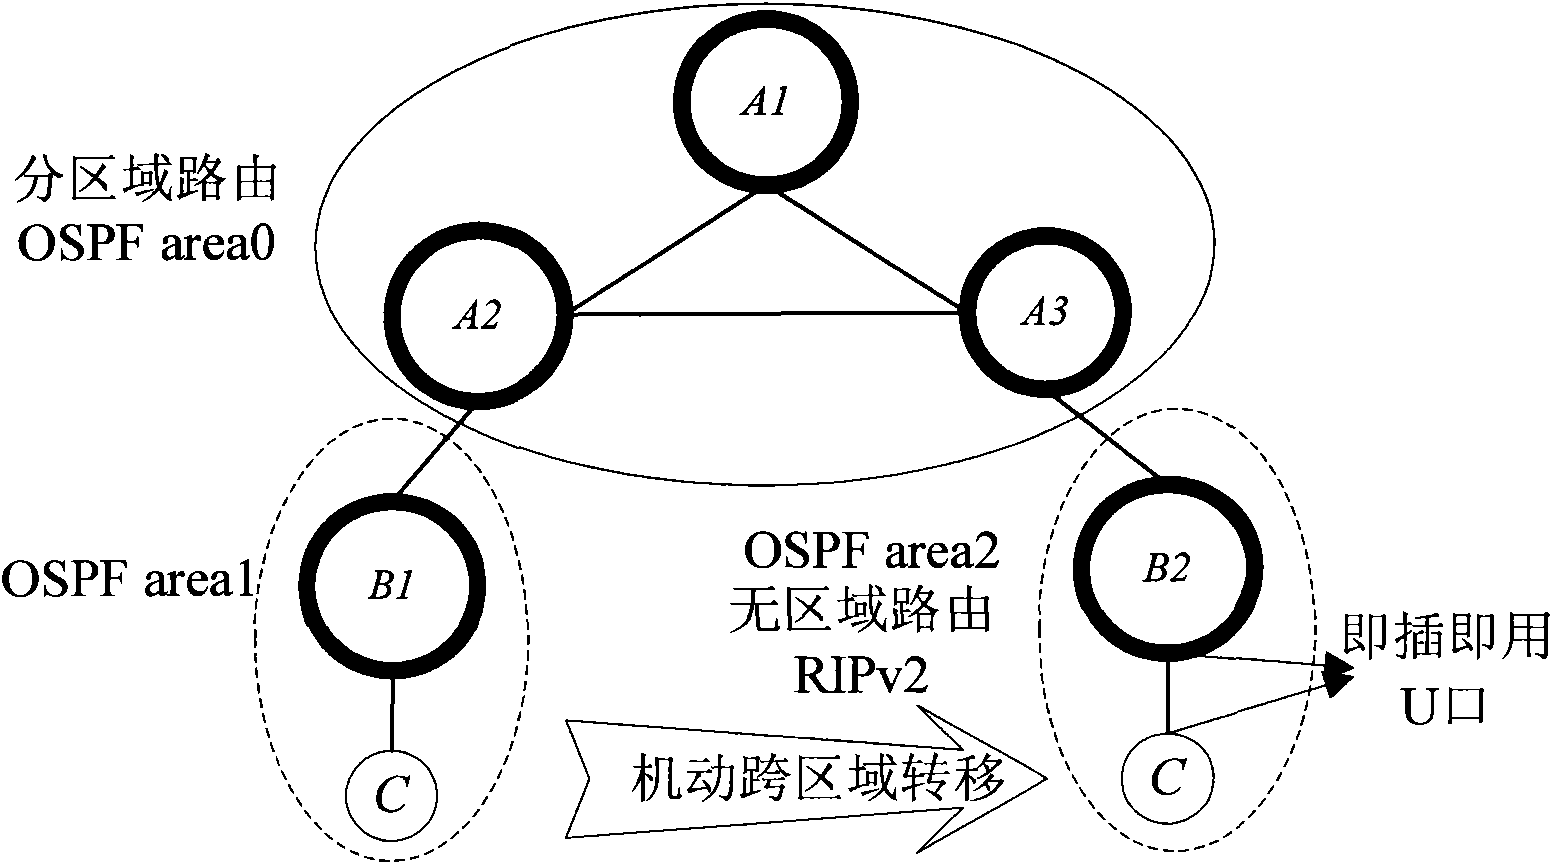 Router cross-autonomy region plug and play method